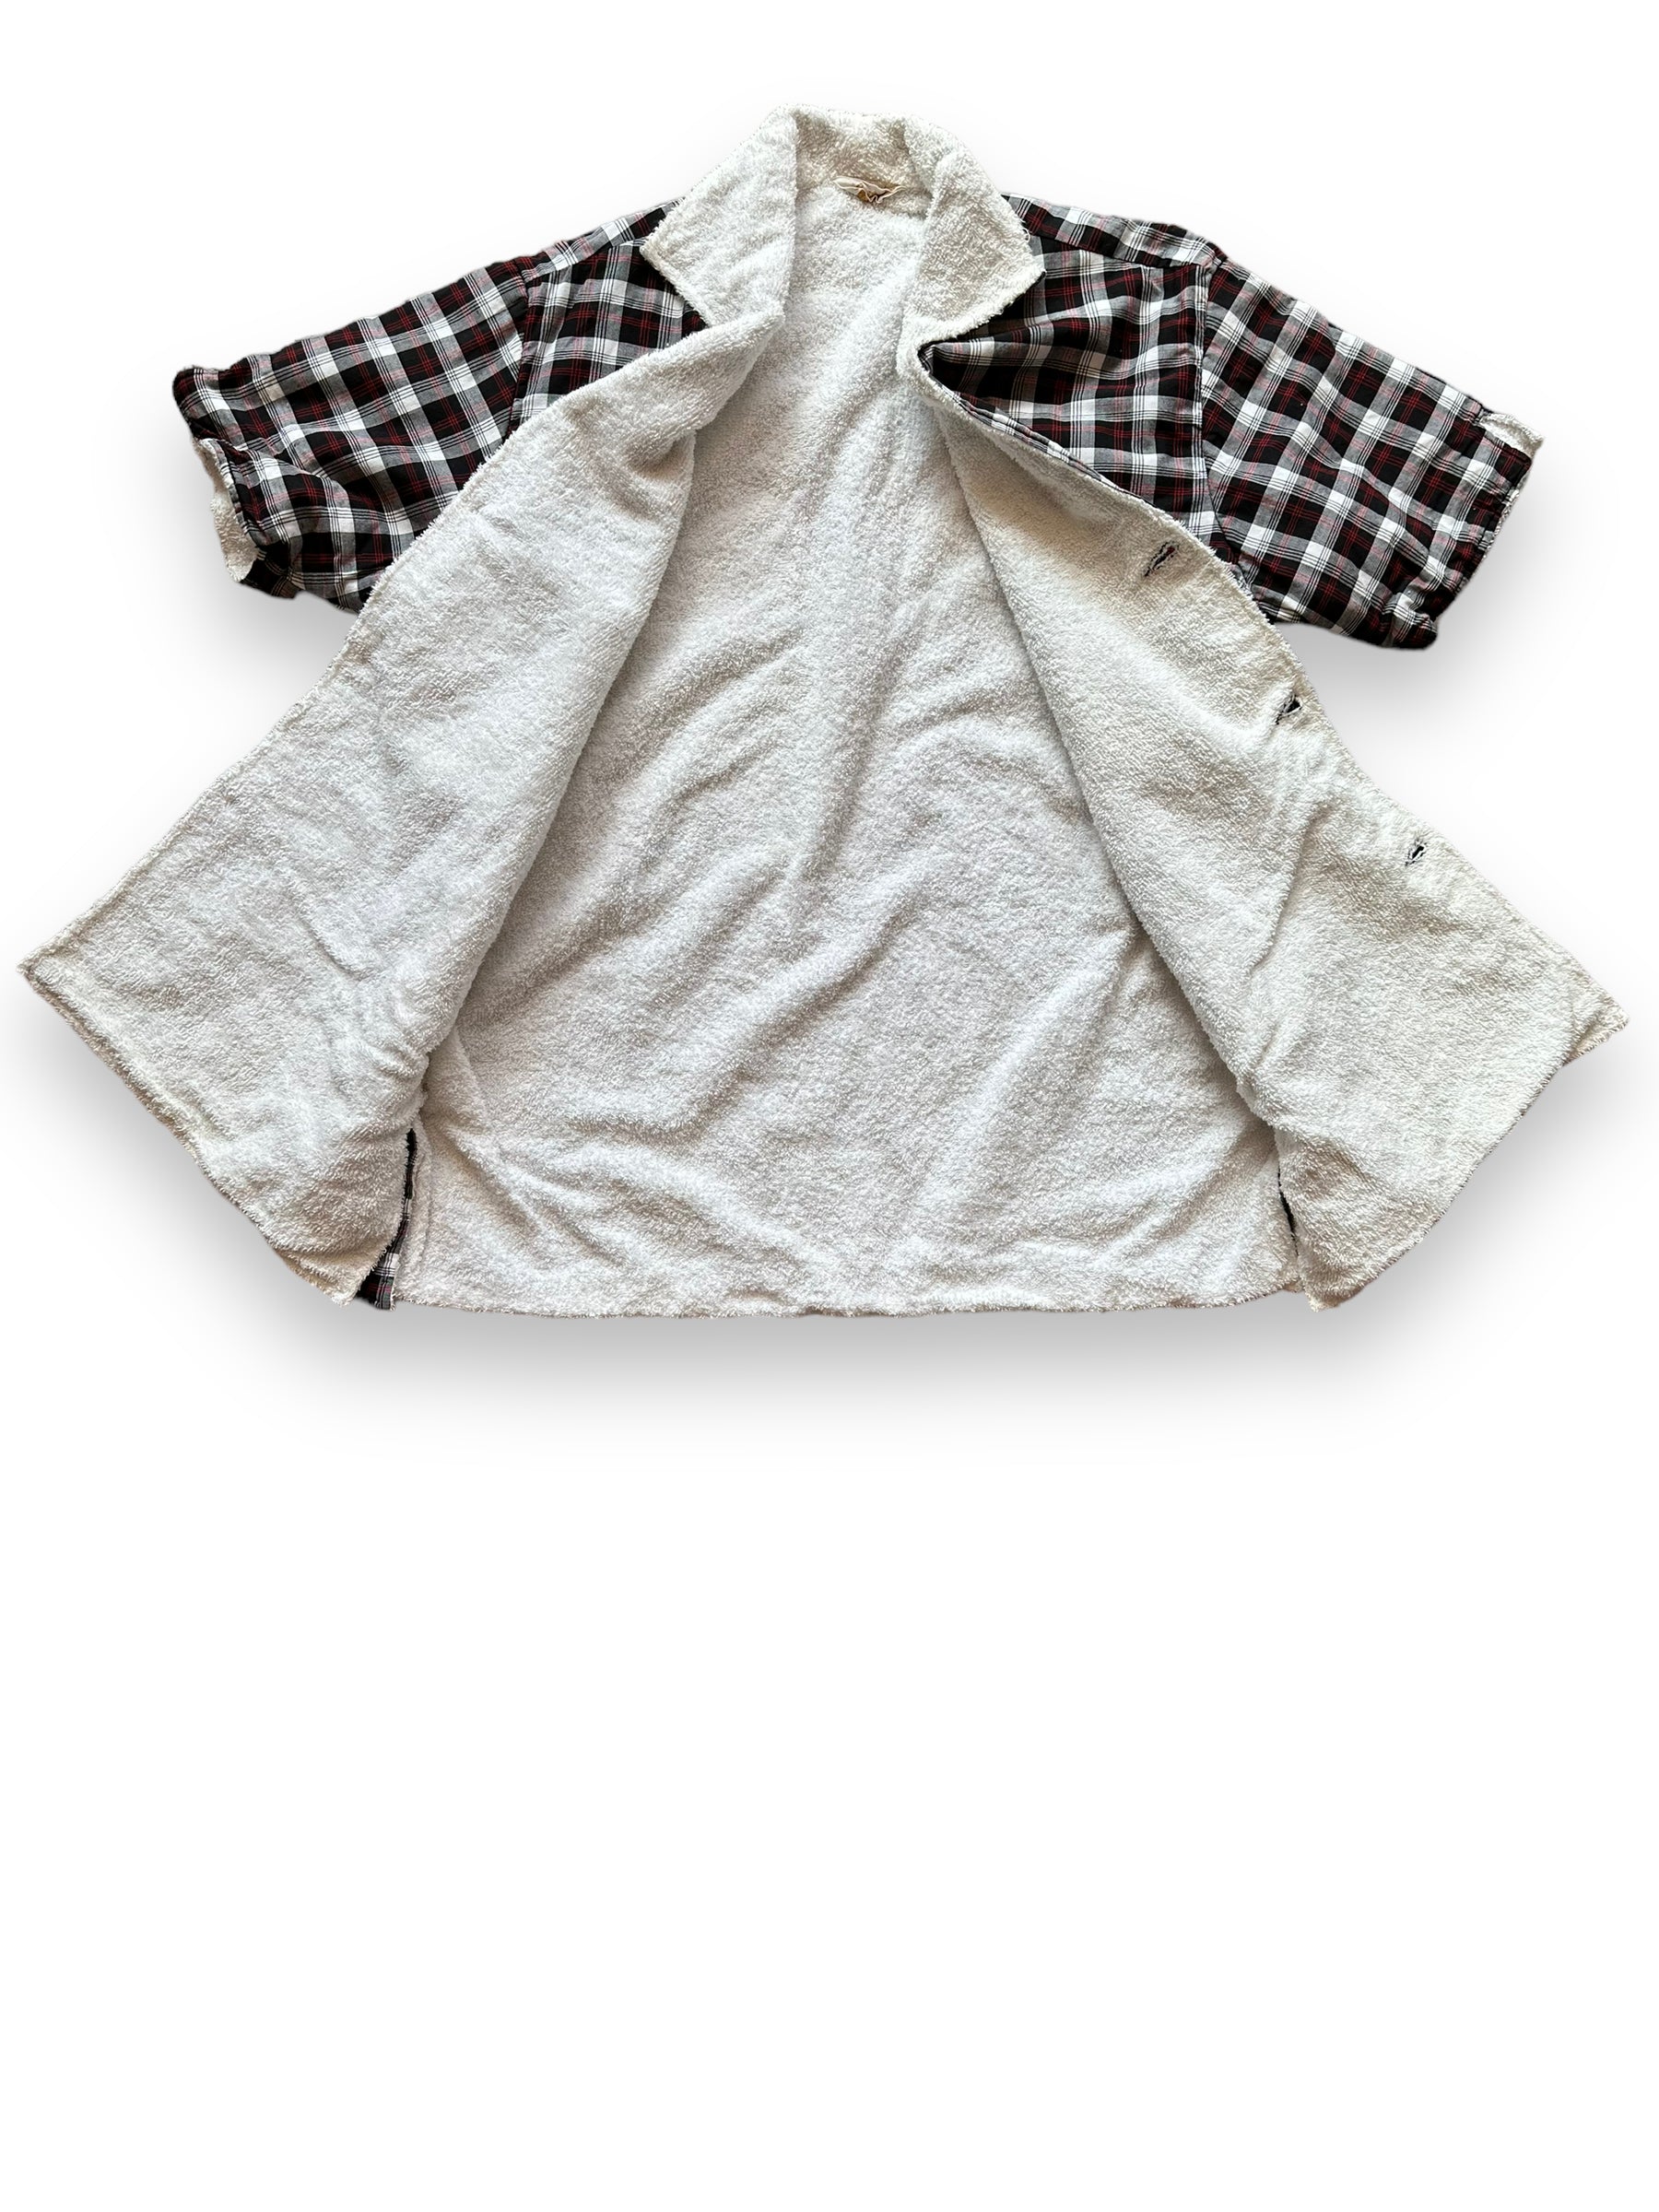 Terry cloth top opened up Vintage Jantzen Quick Care Cotton 3 Piece Cabana Set | Barn Owl Vintage Seattle | Vintage Beachwear Seattle